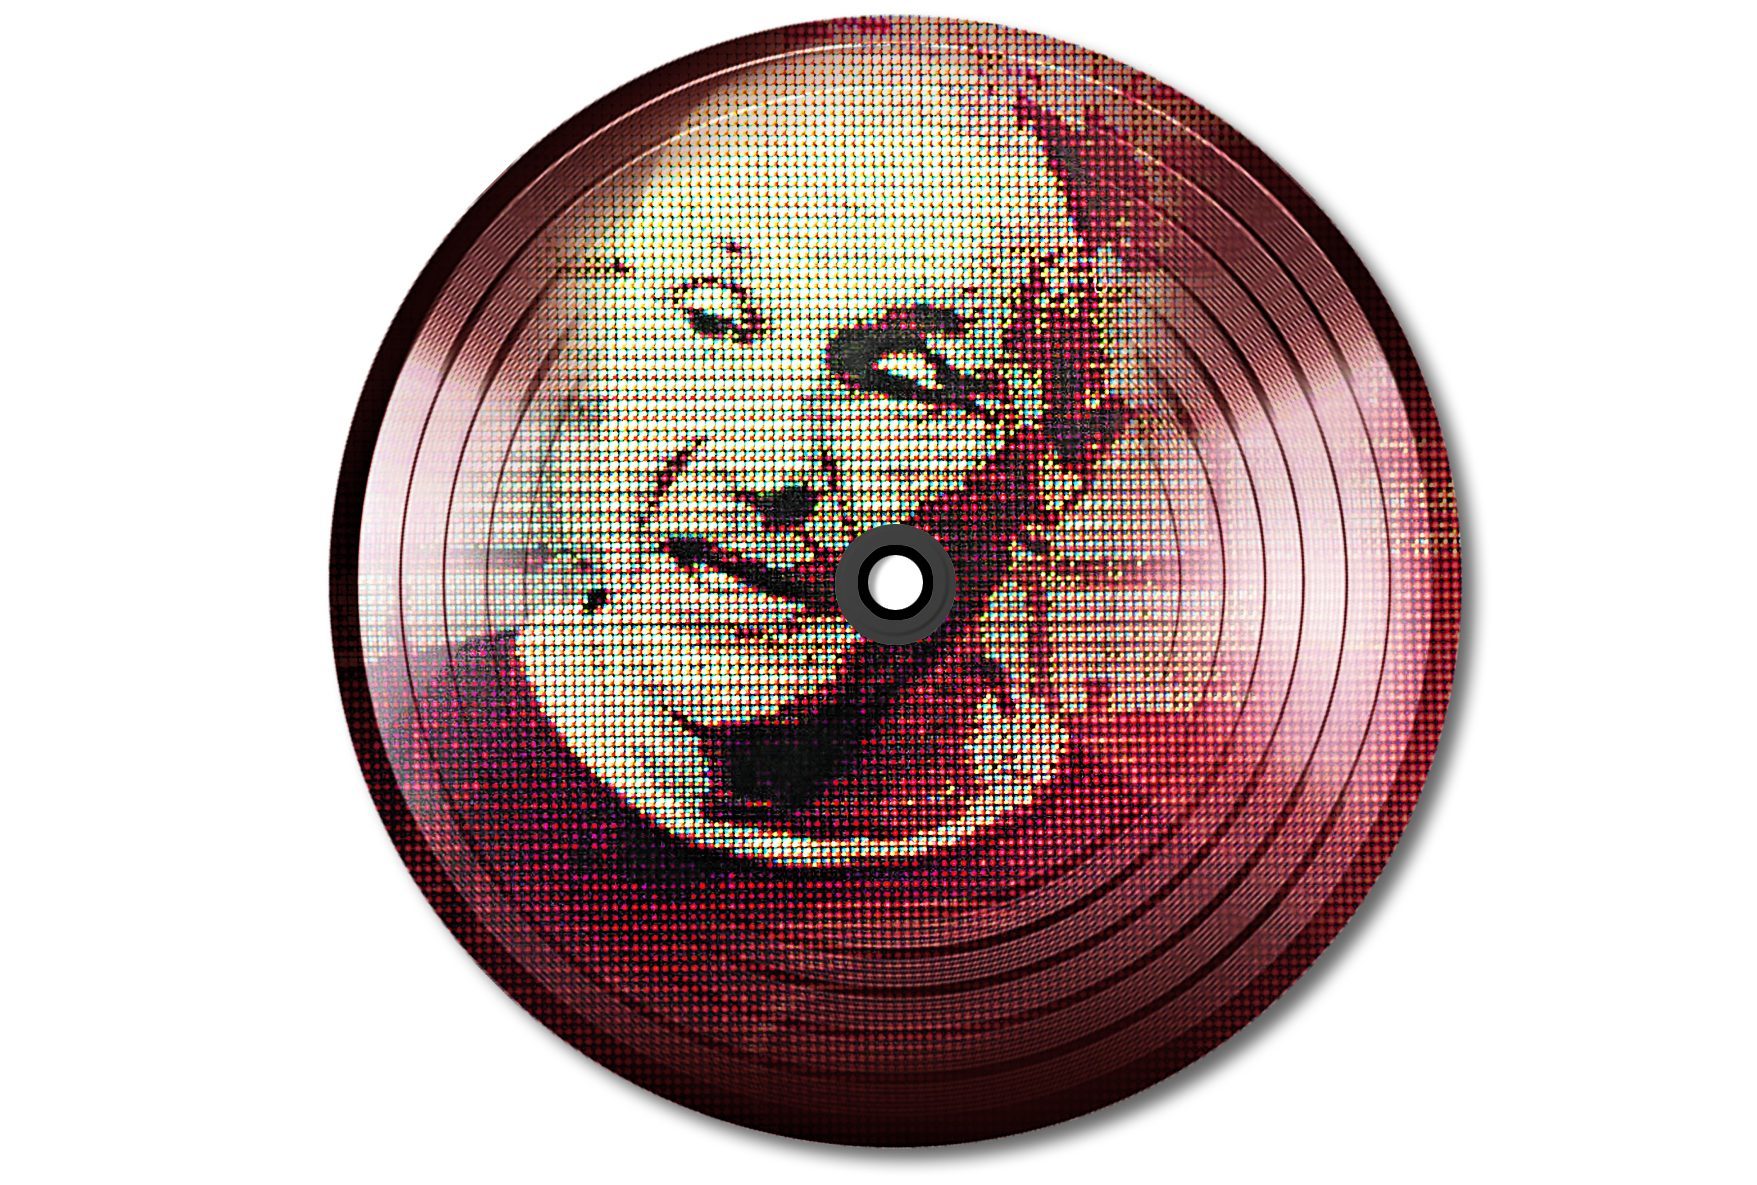 Bill Shanklys words were recorded on vinyl